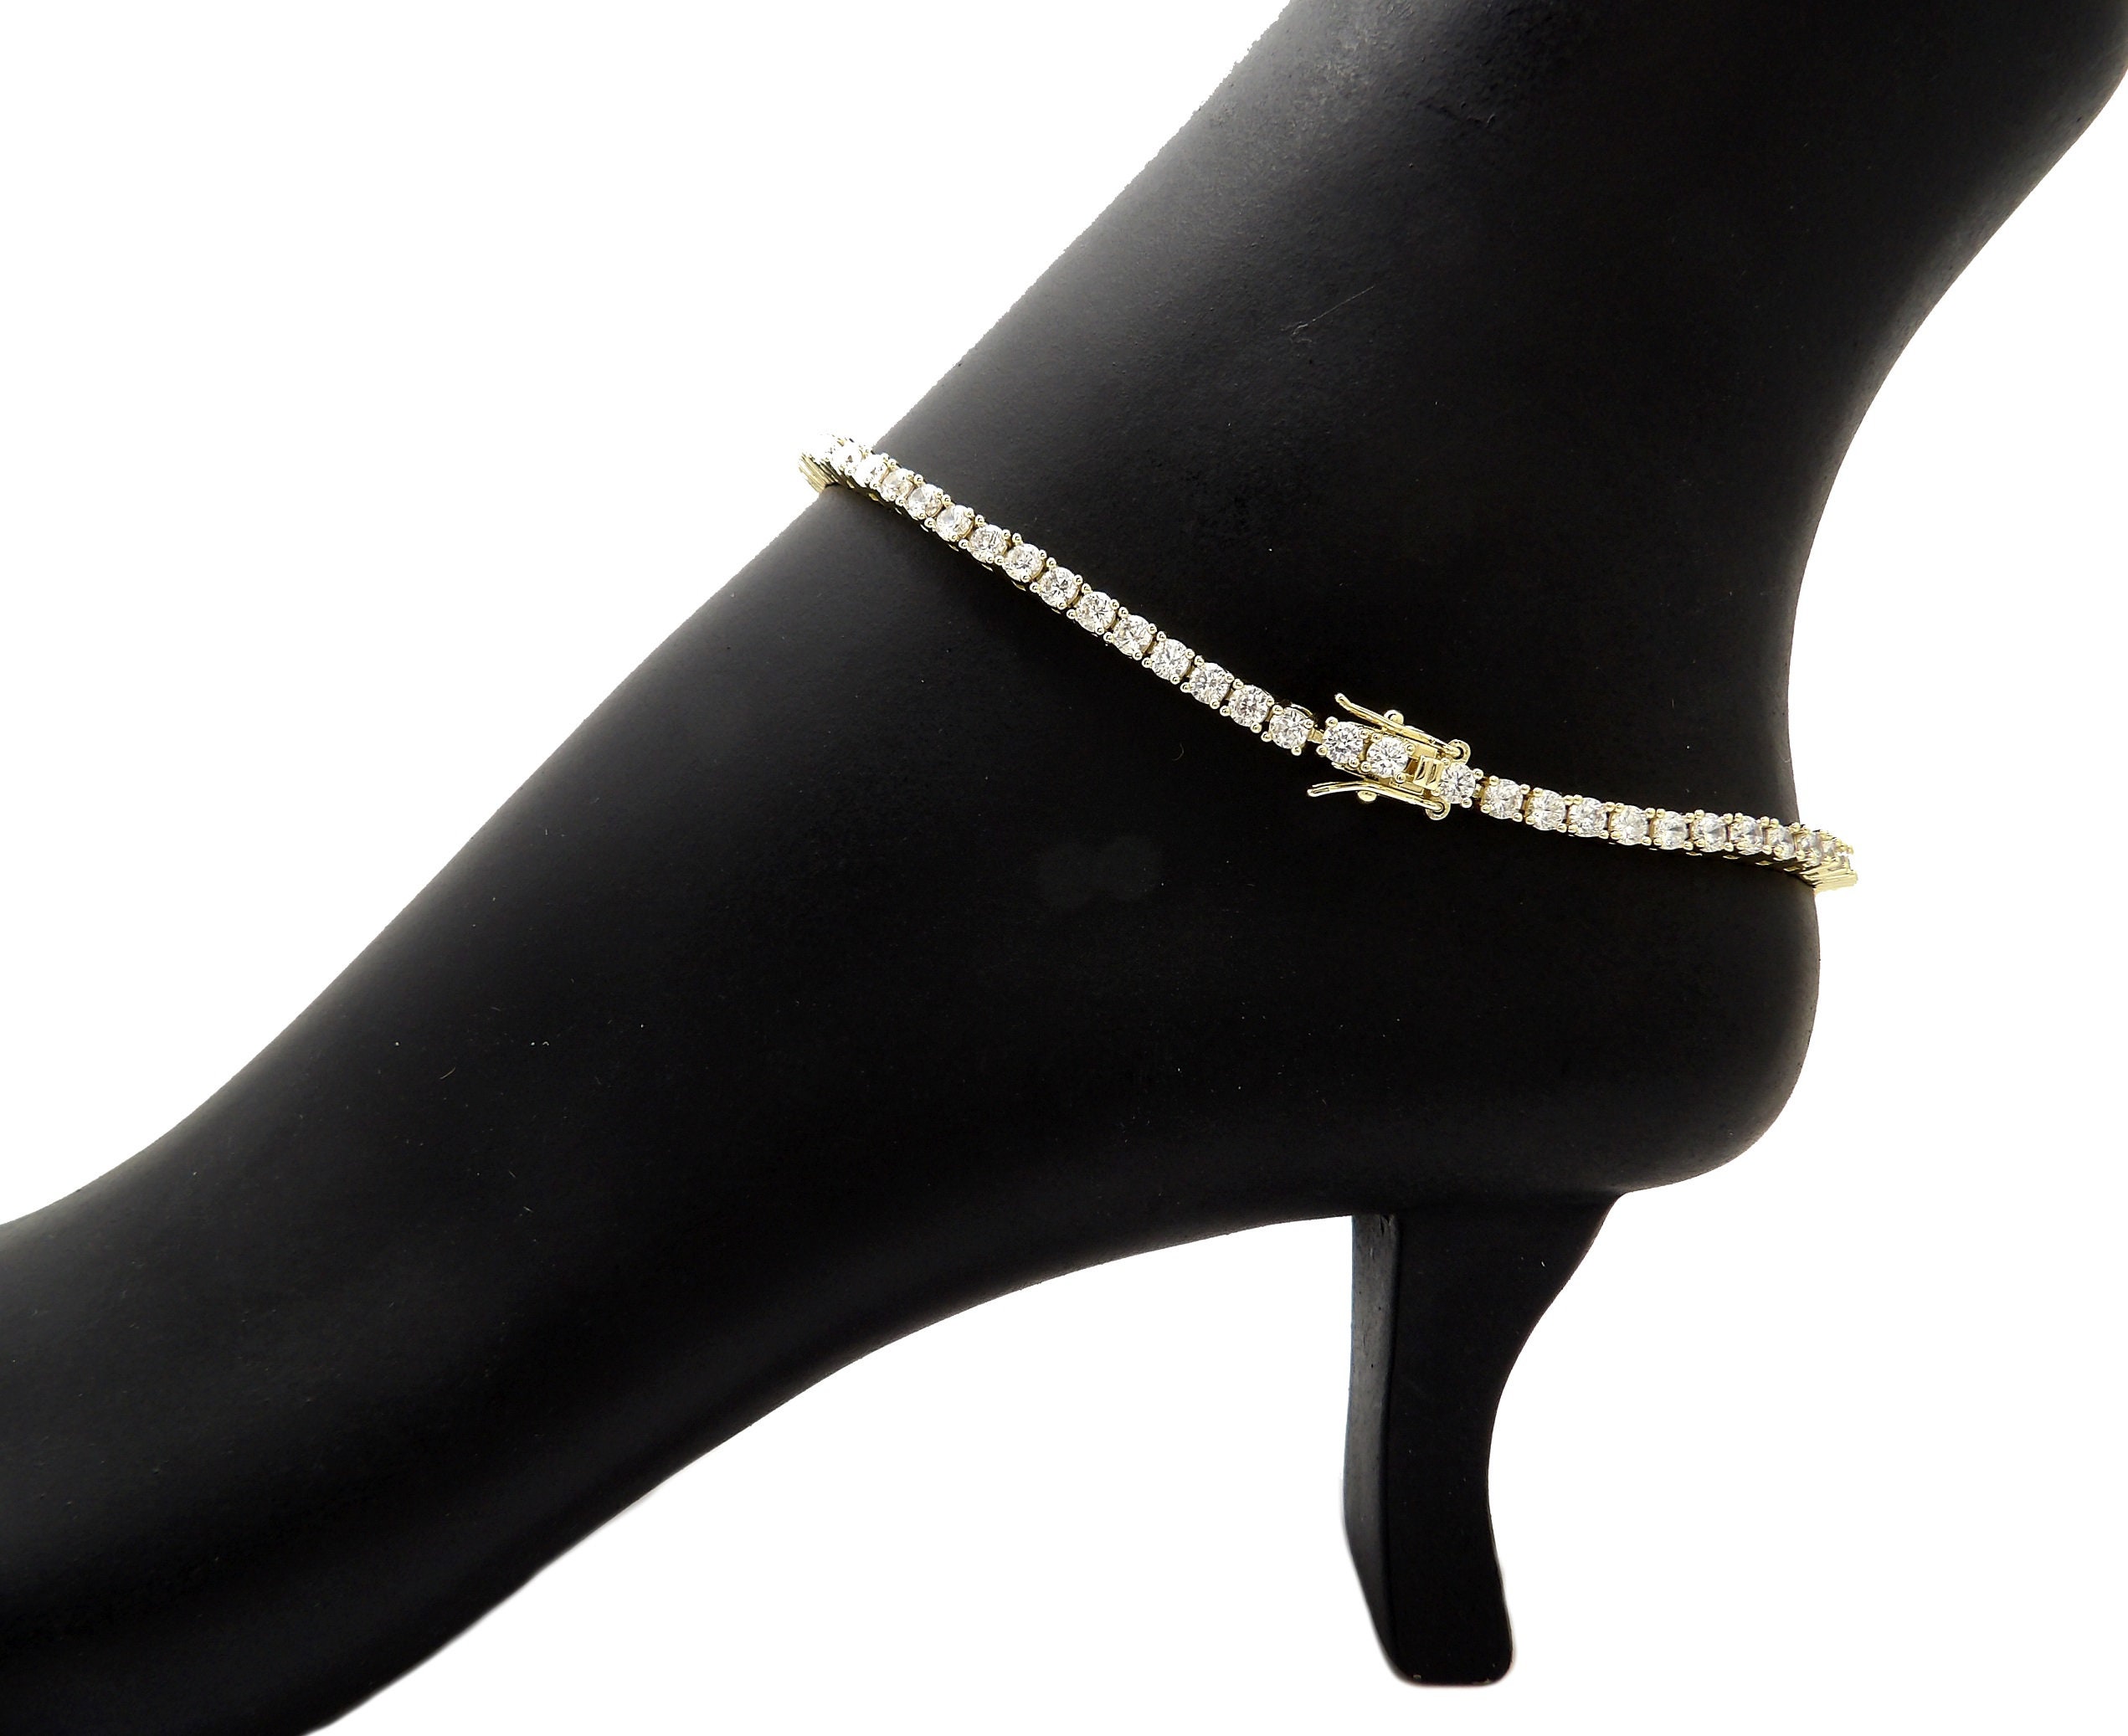 Beberlini A-Z Initial Letter Pendant 14K Gold Filled Cubic Zirconia Mariner Chain Anklet 10 Set CZ Charm Foot Bracelet 3.2 mm Female Women Girl U